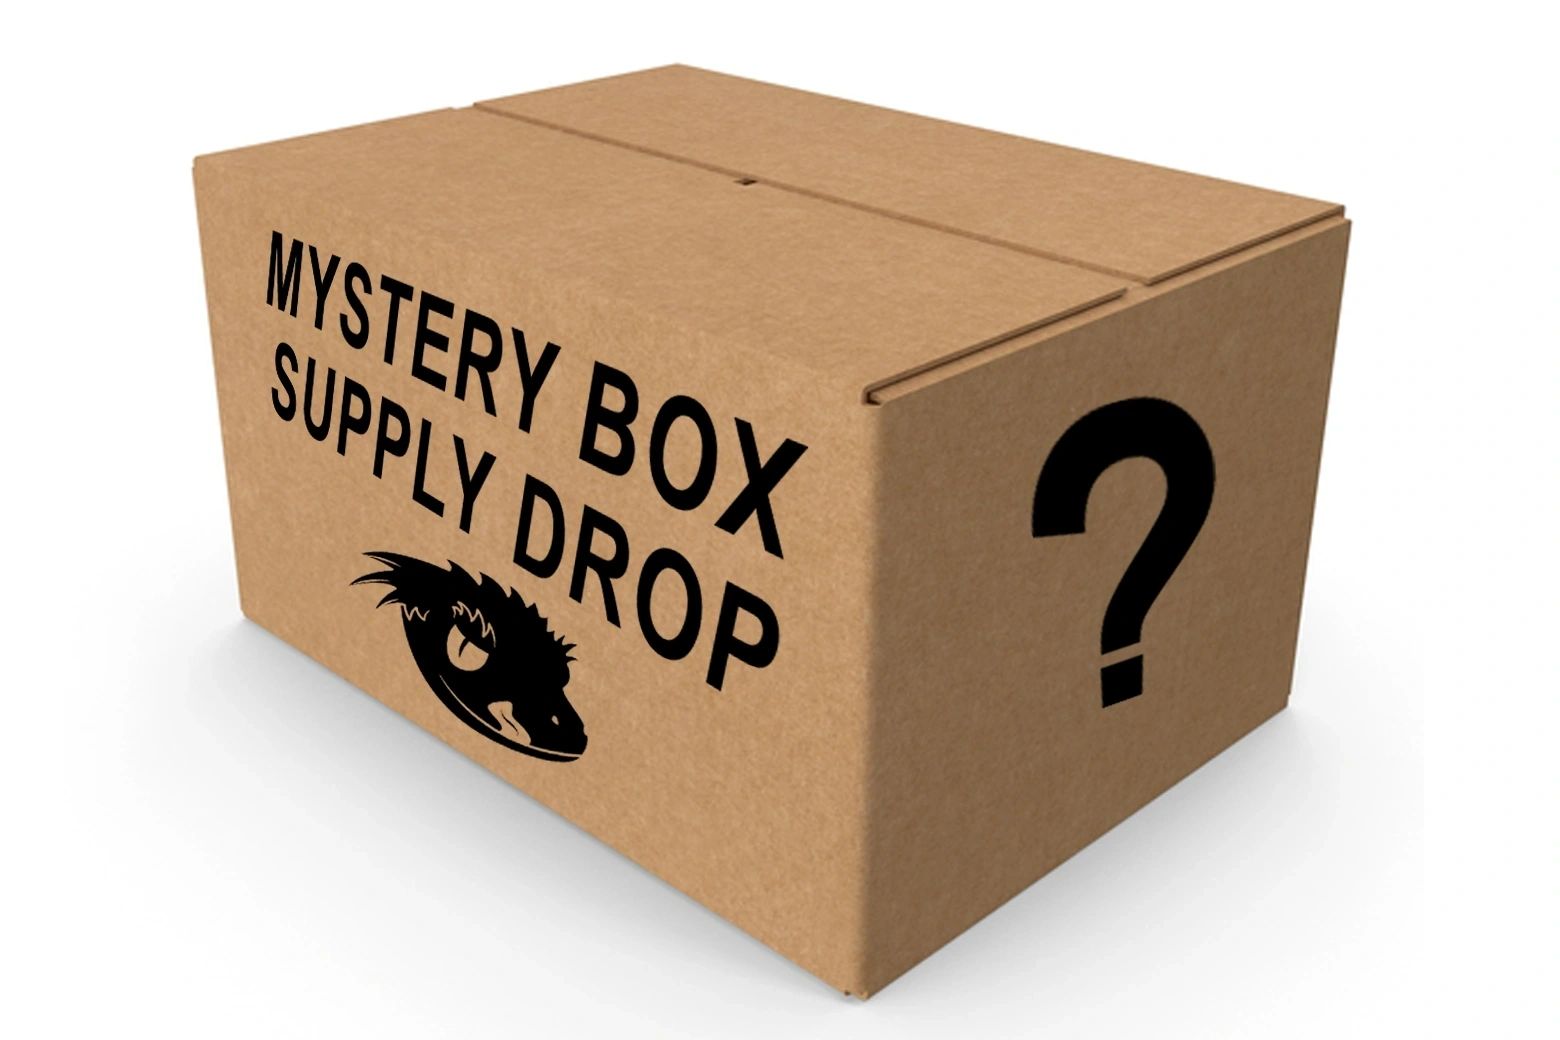 Supply & Merch Drop Mystery Box - Coming soon